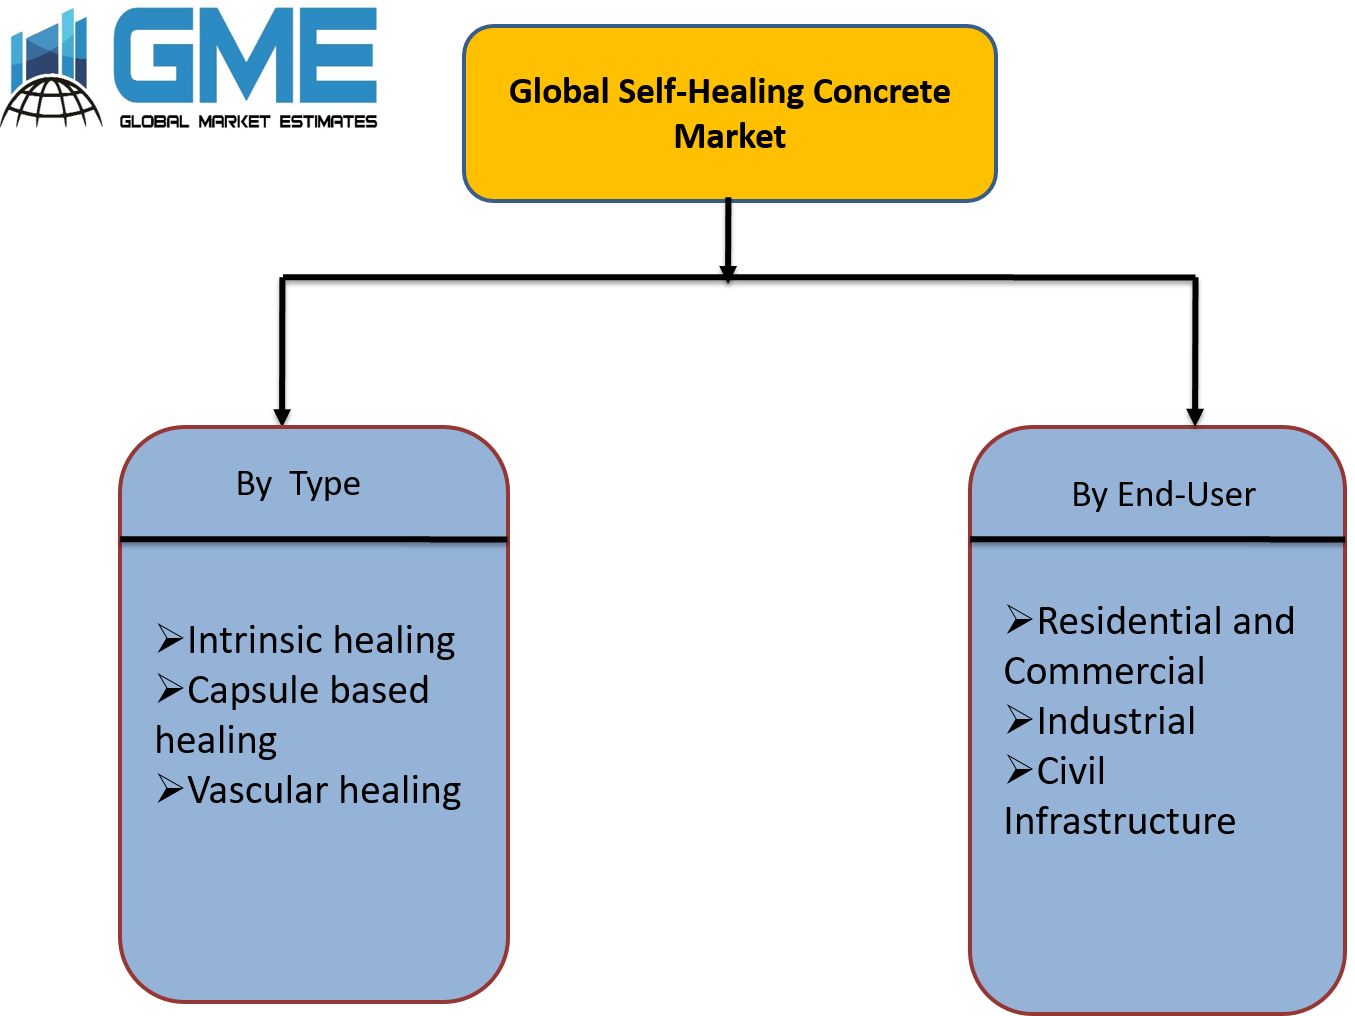 Global Self-Healing Concrete Market Segmentation